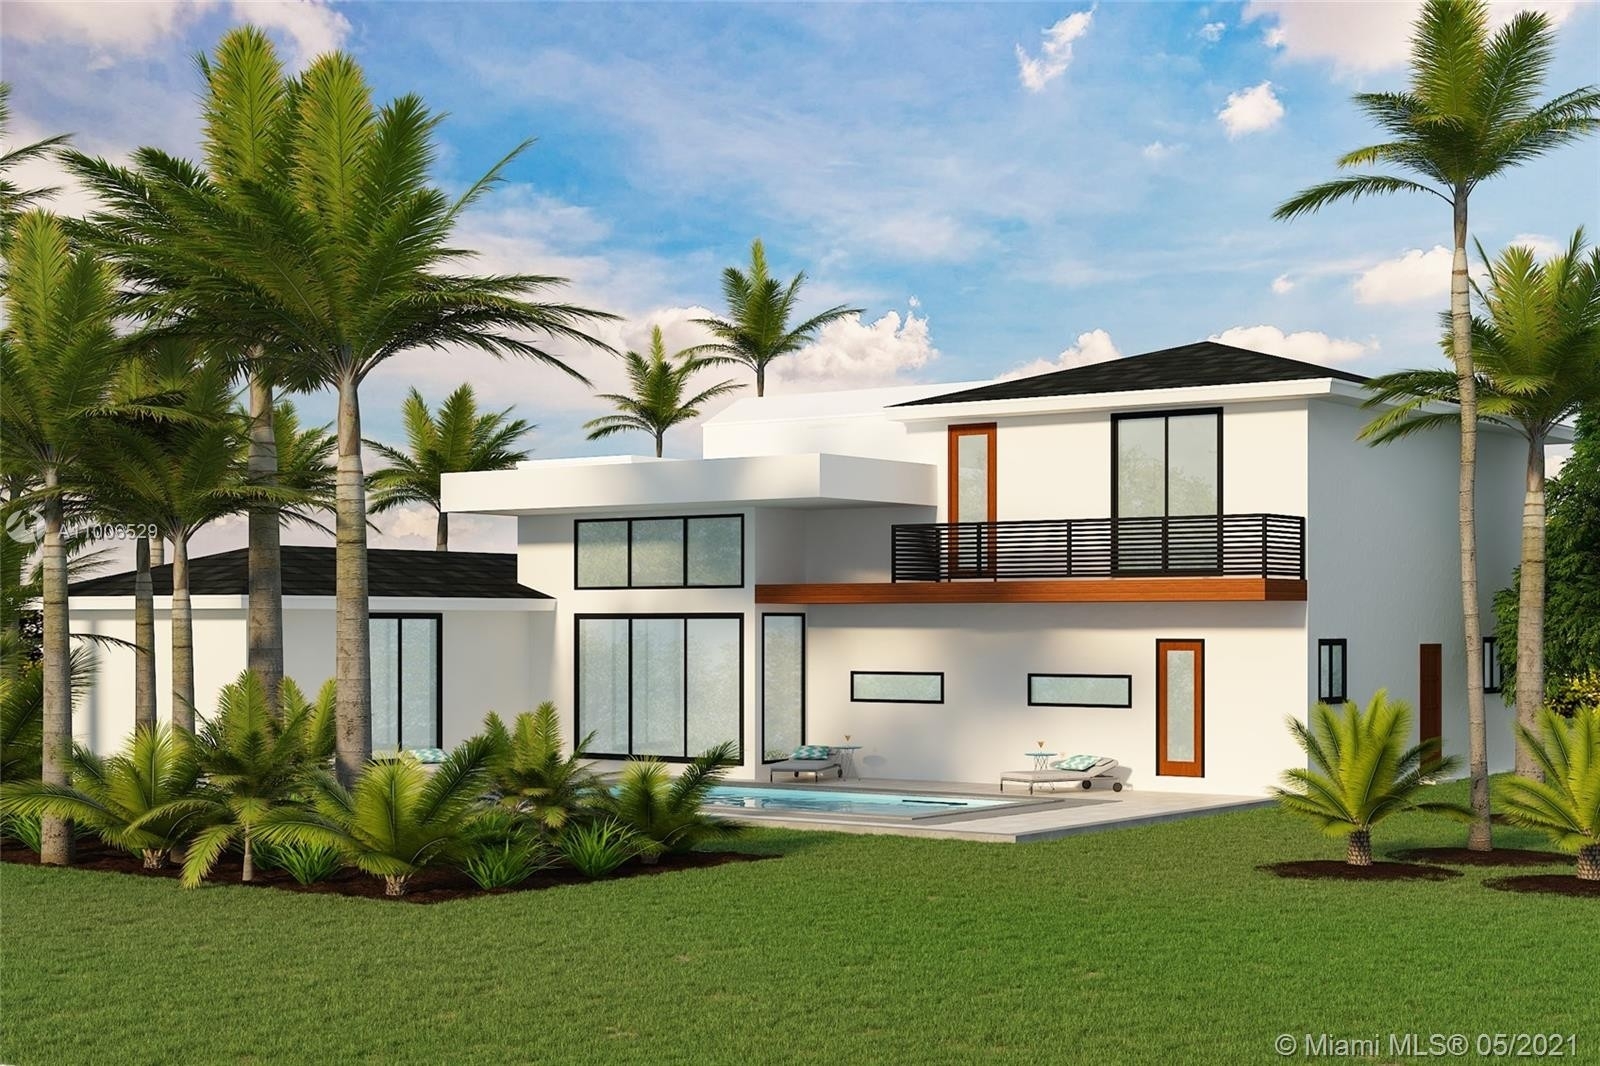 9. Single Family Homes for Sale at Landings, Fort Lauderdale, FL 33308